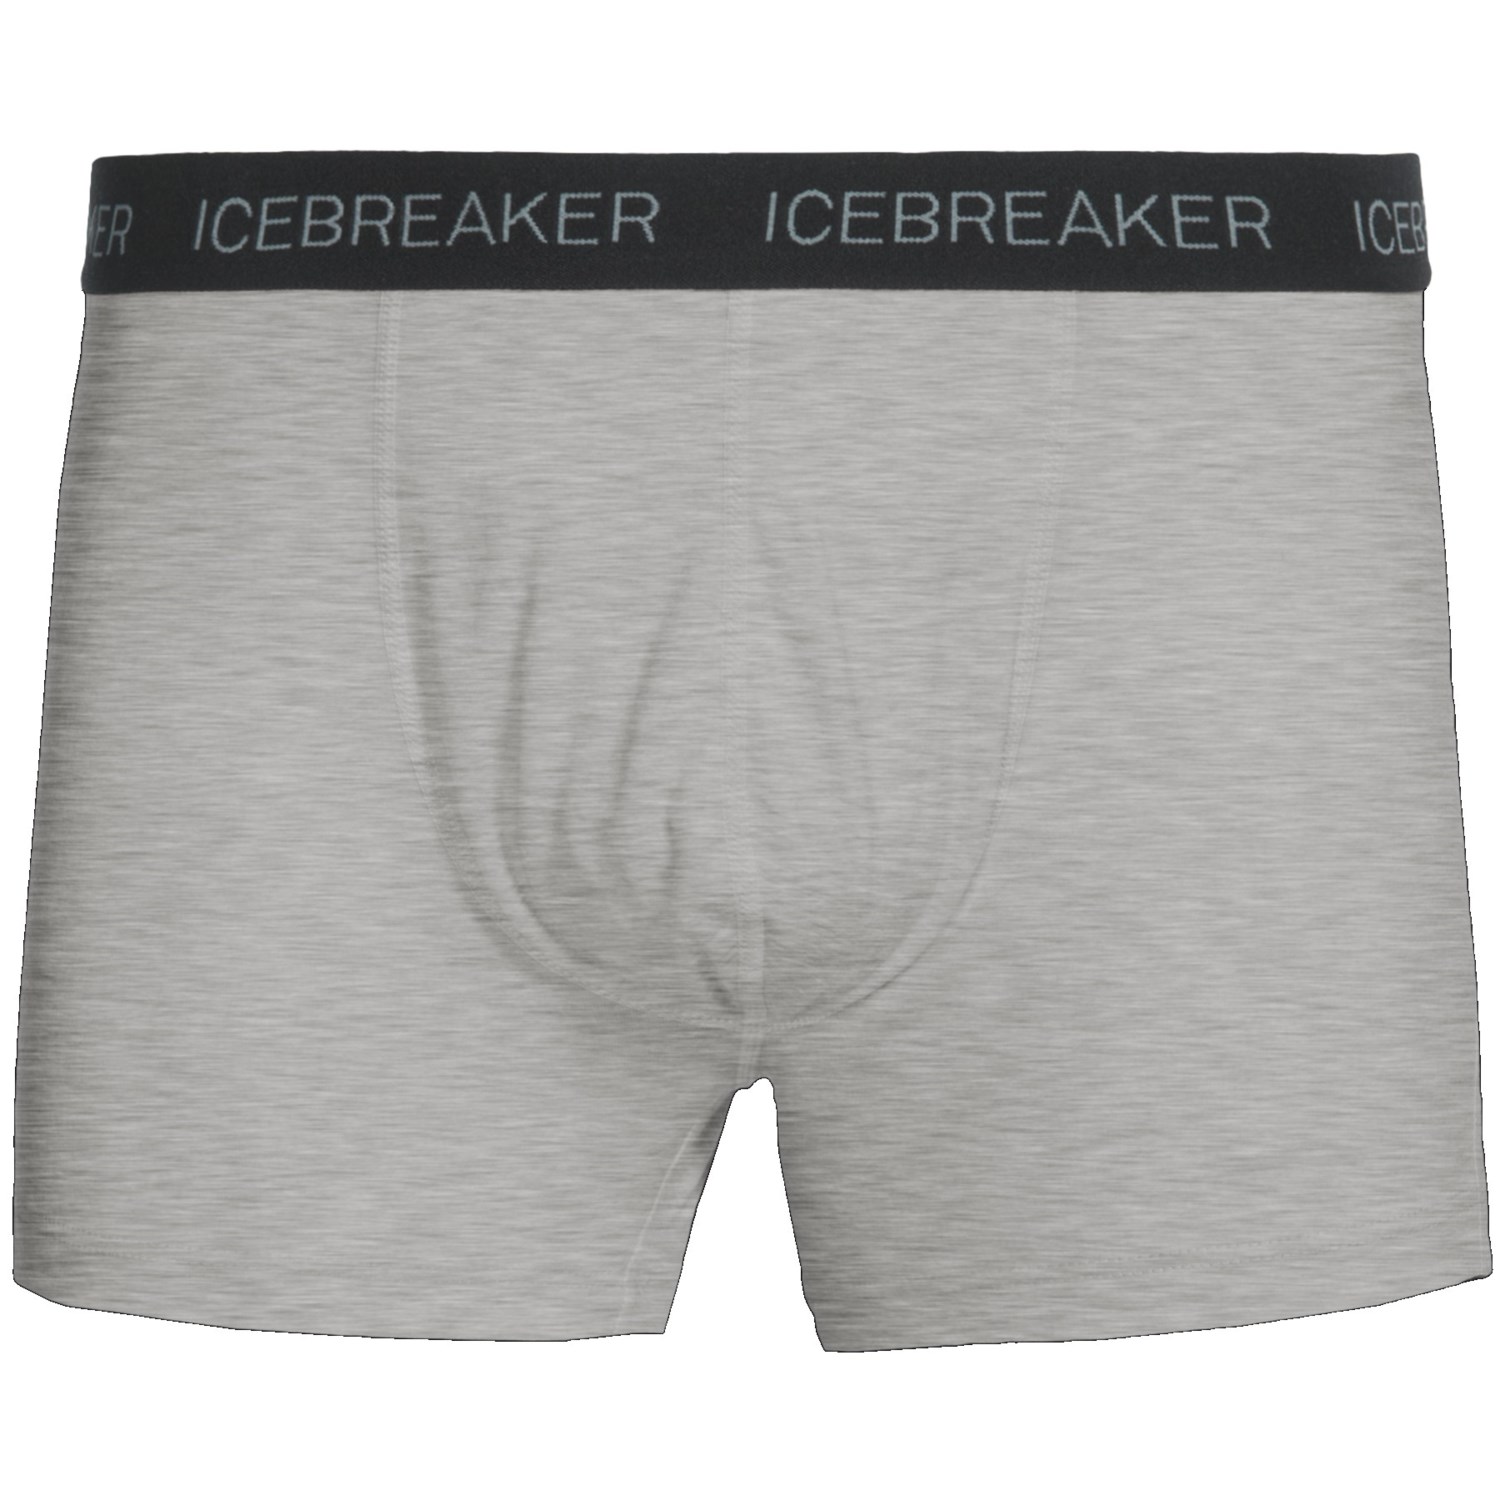 Icebreaker Bodyfit 150 Boxer Briefs - Merino Wool (For Men) - Save 30%